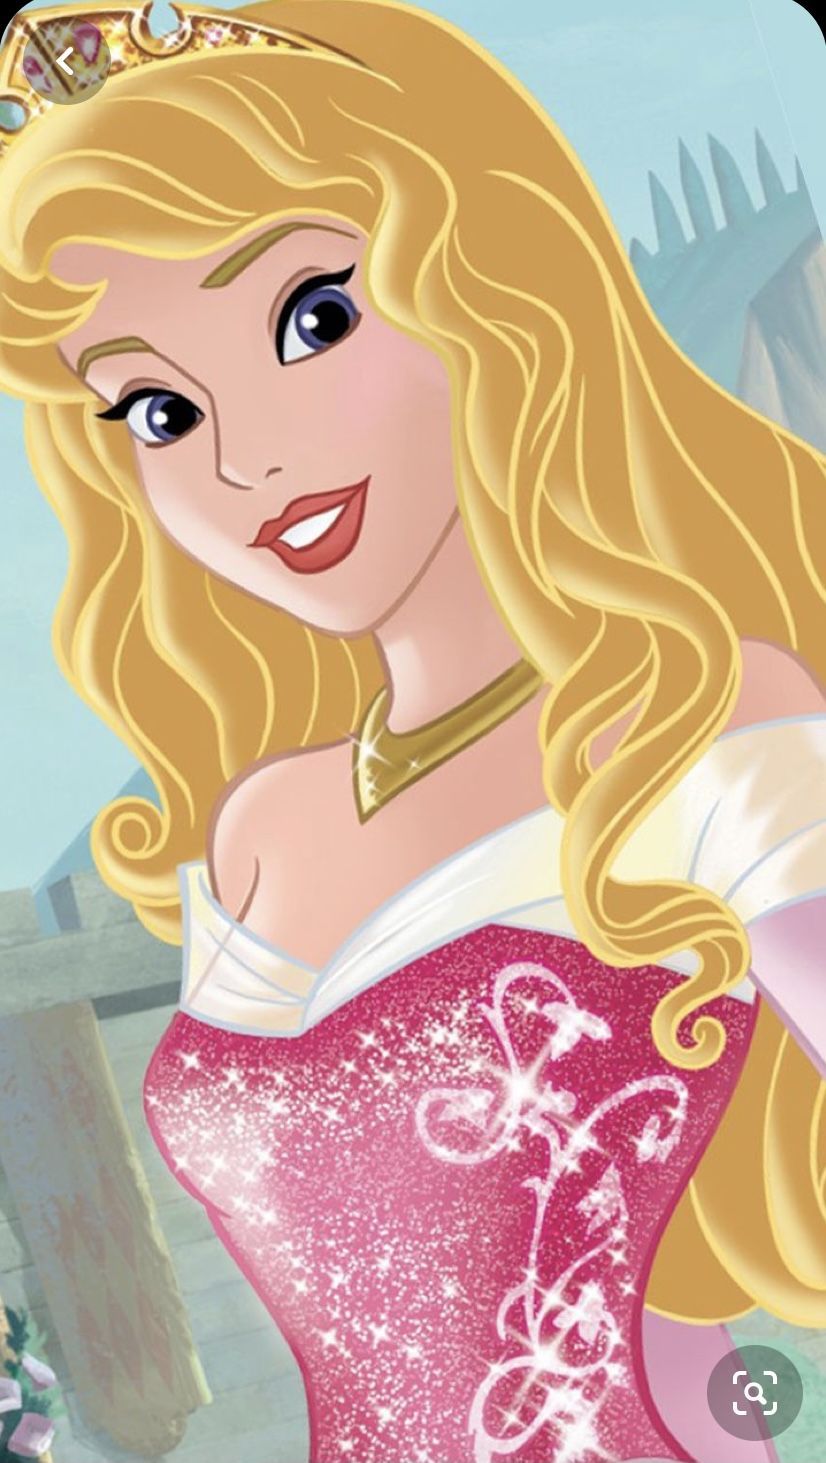 Disney Princess. Disney princess wallpaper, Disney princess aurora, Aurora disney